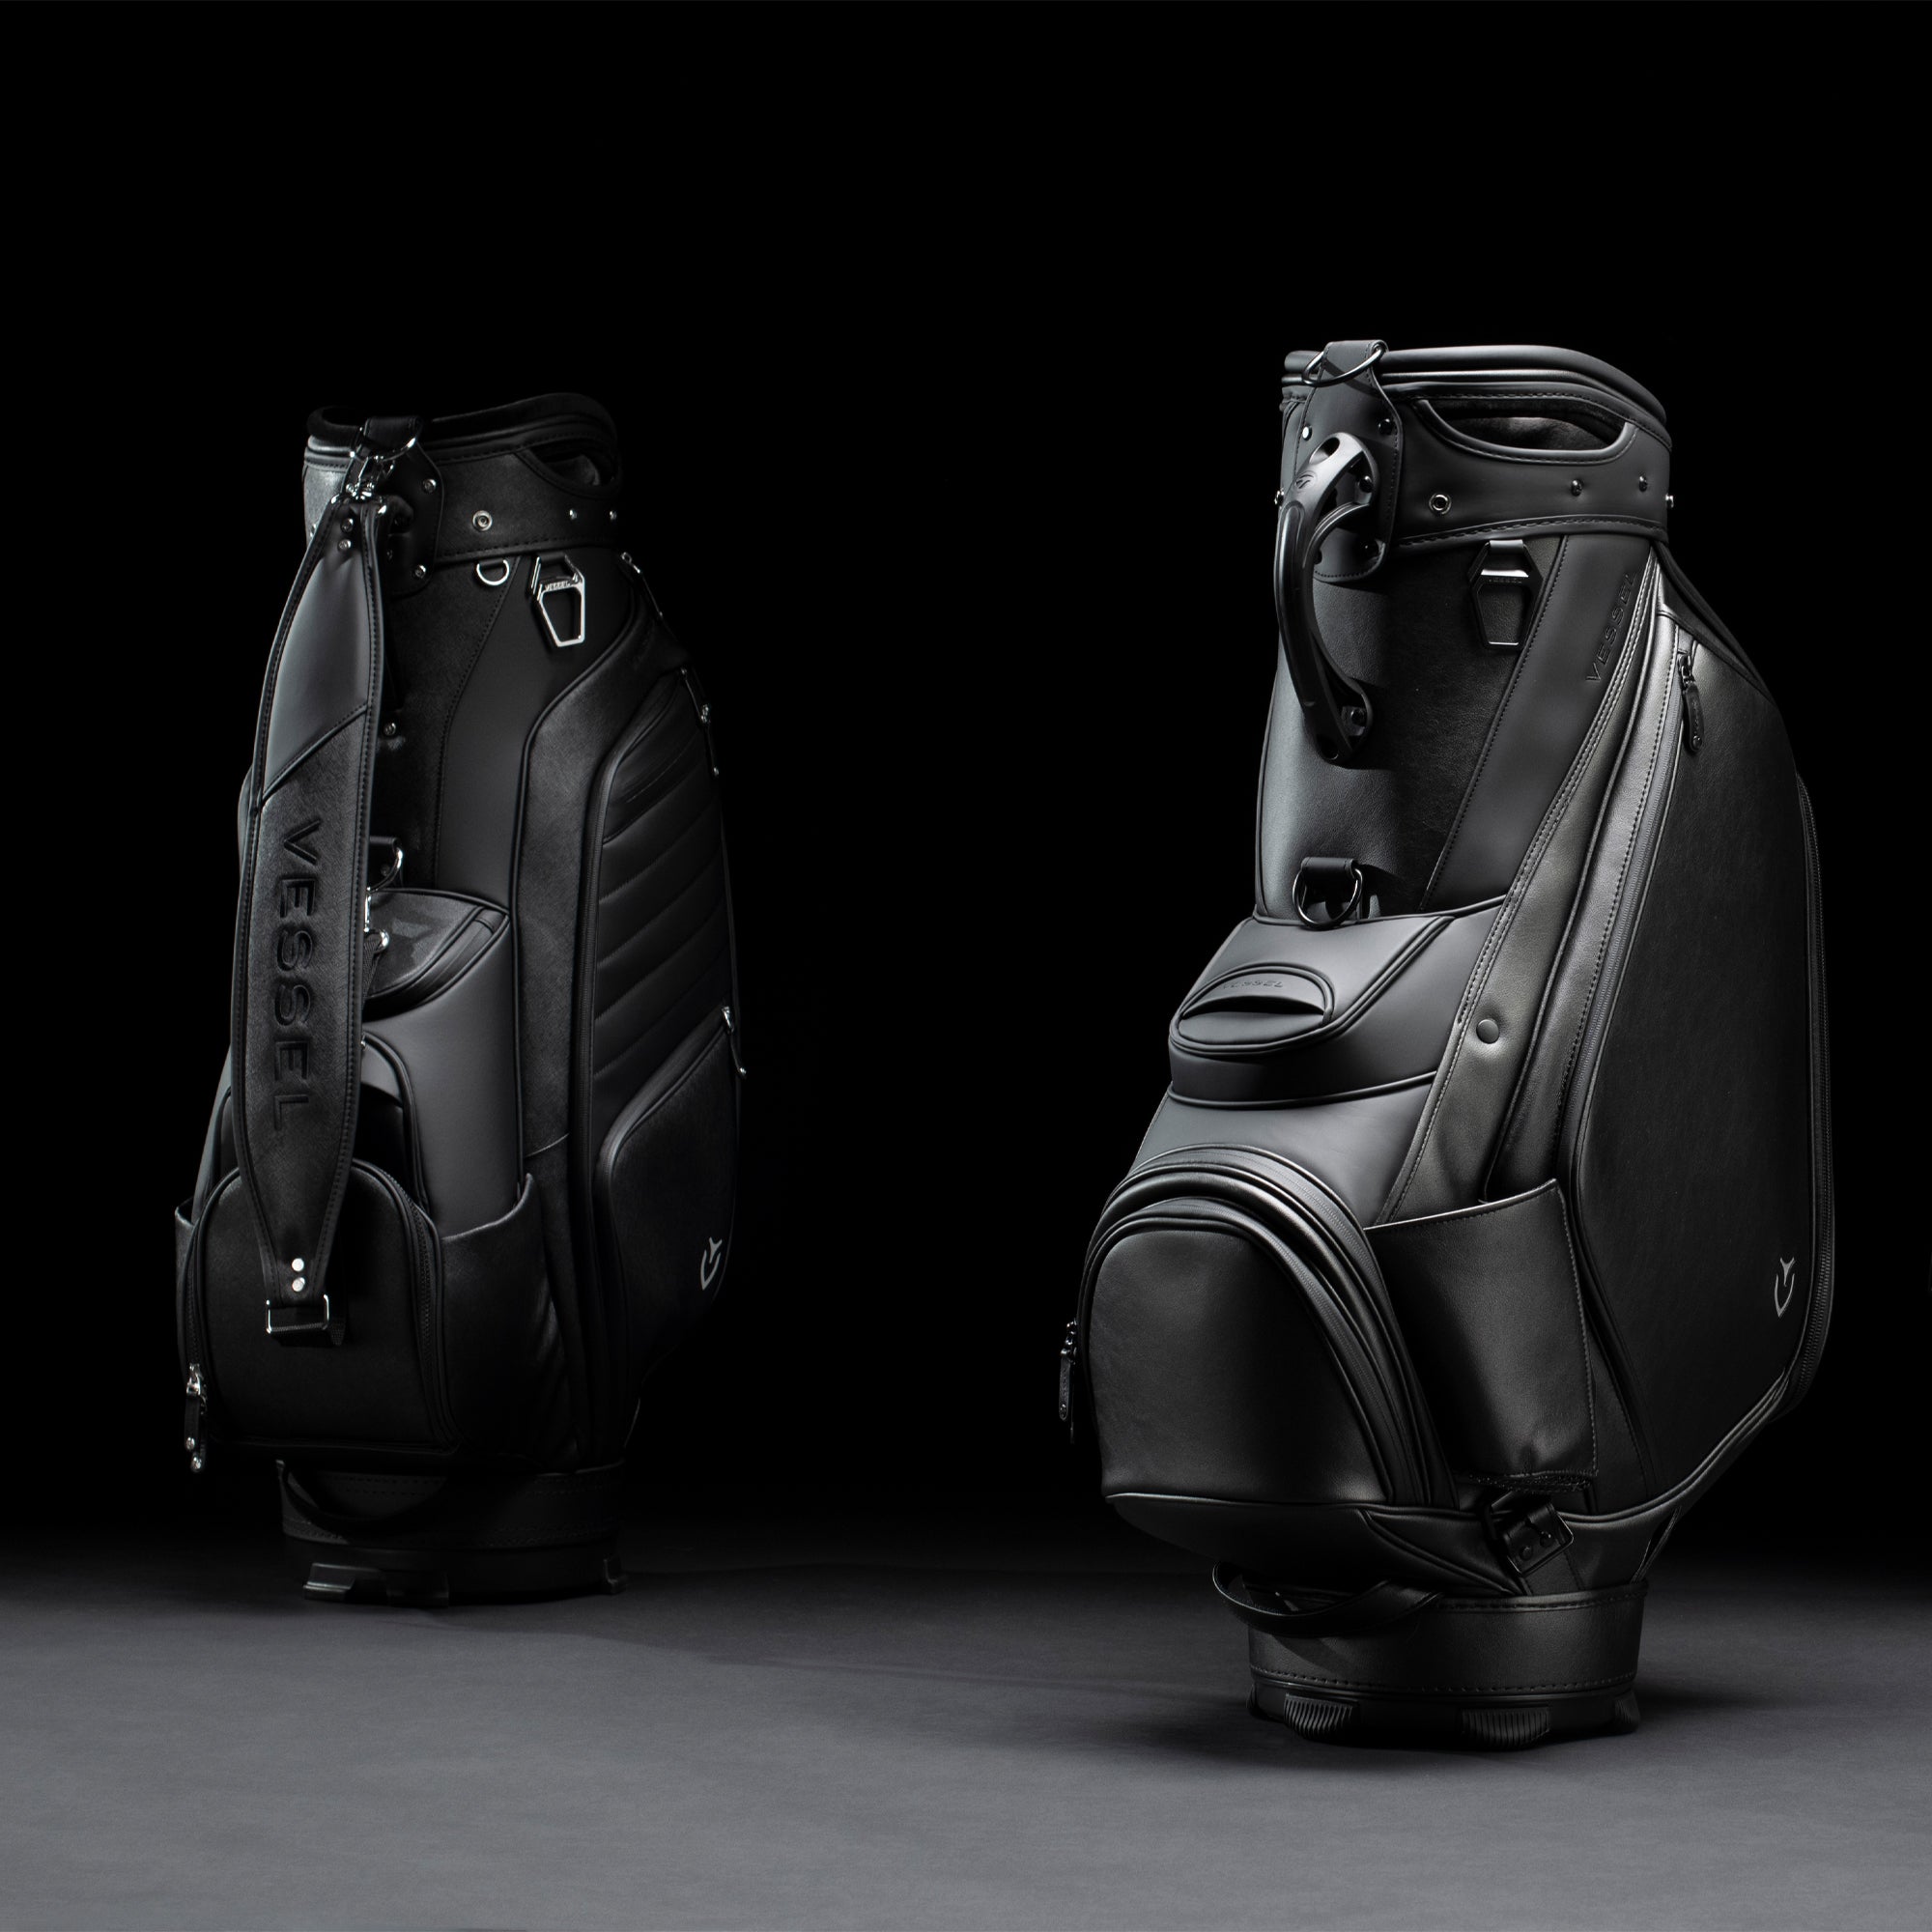 Two black golf staff bags in black studio